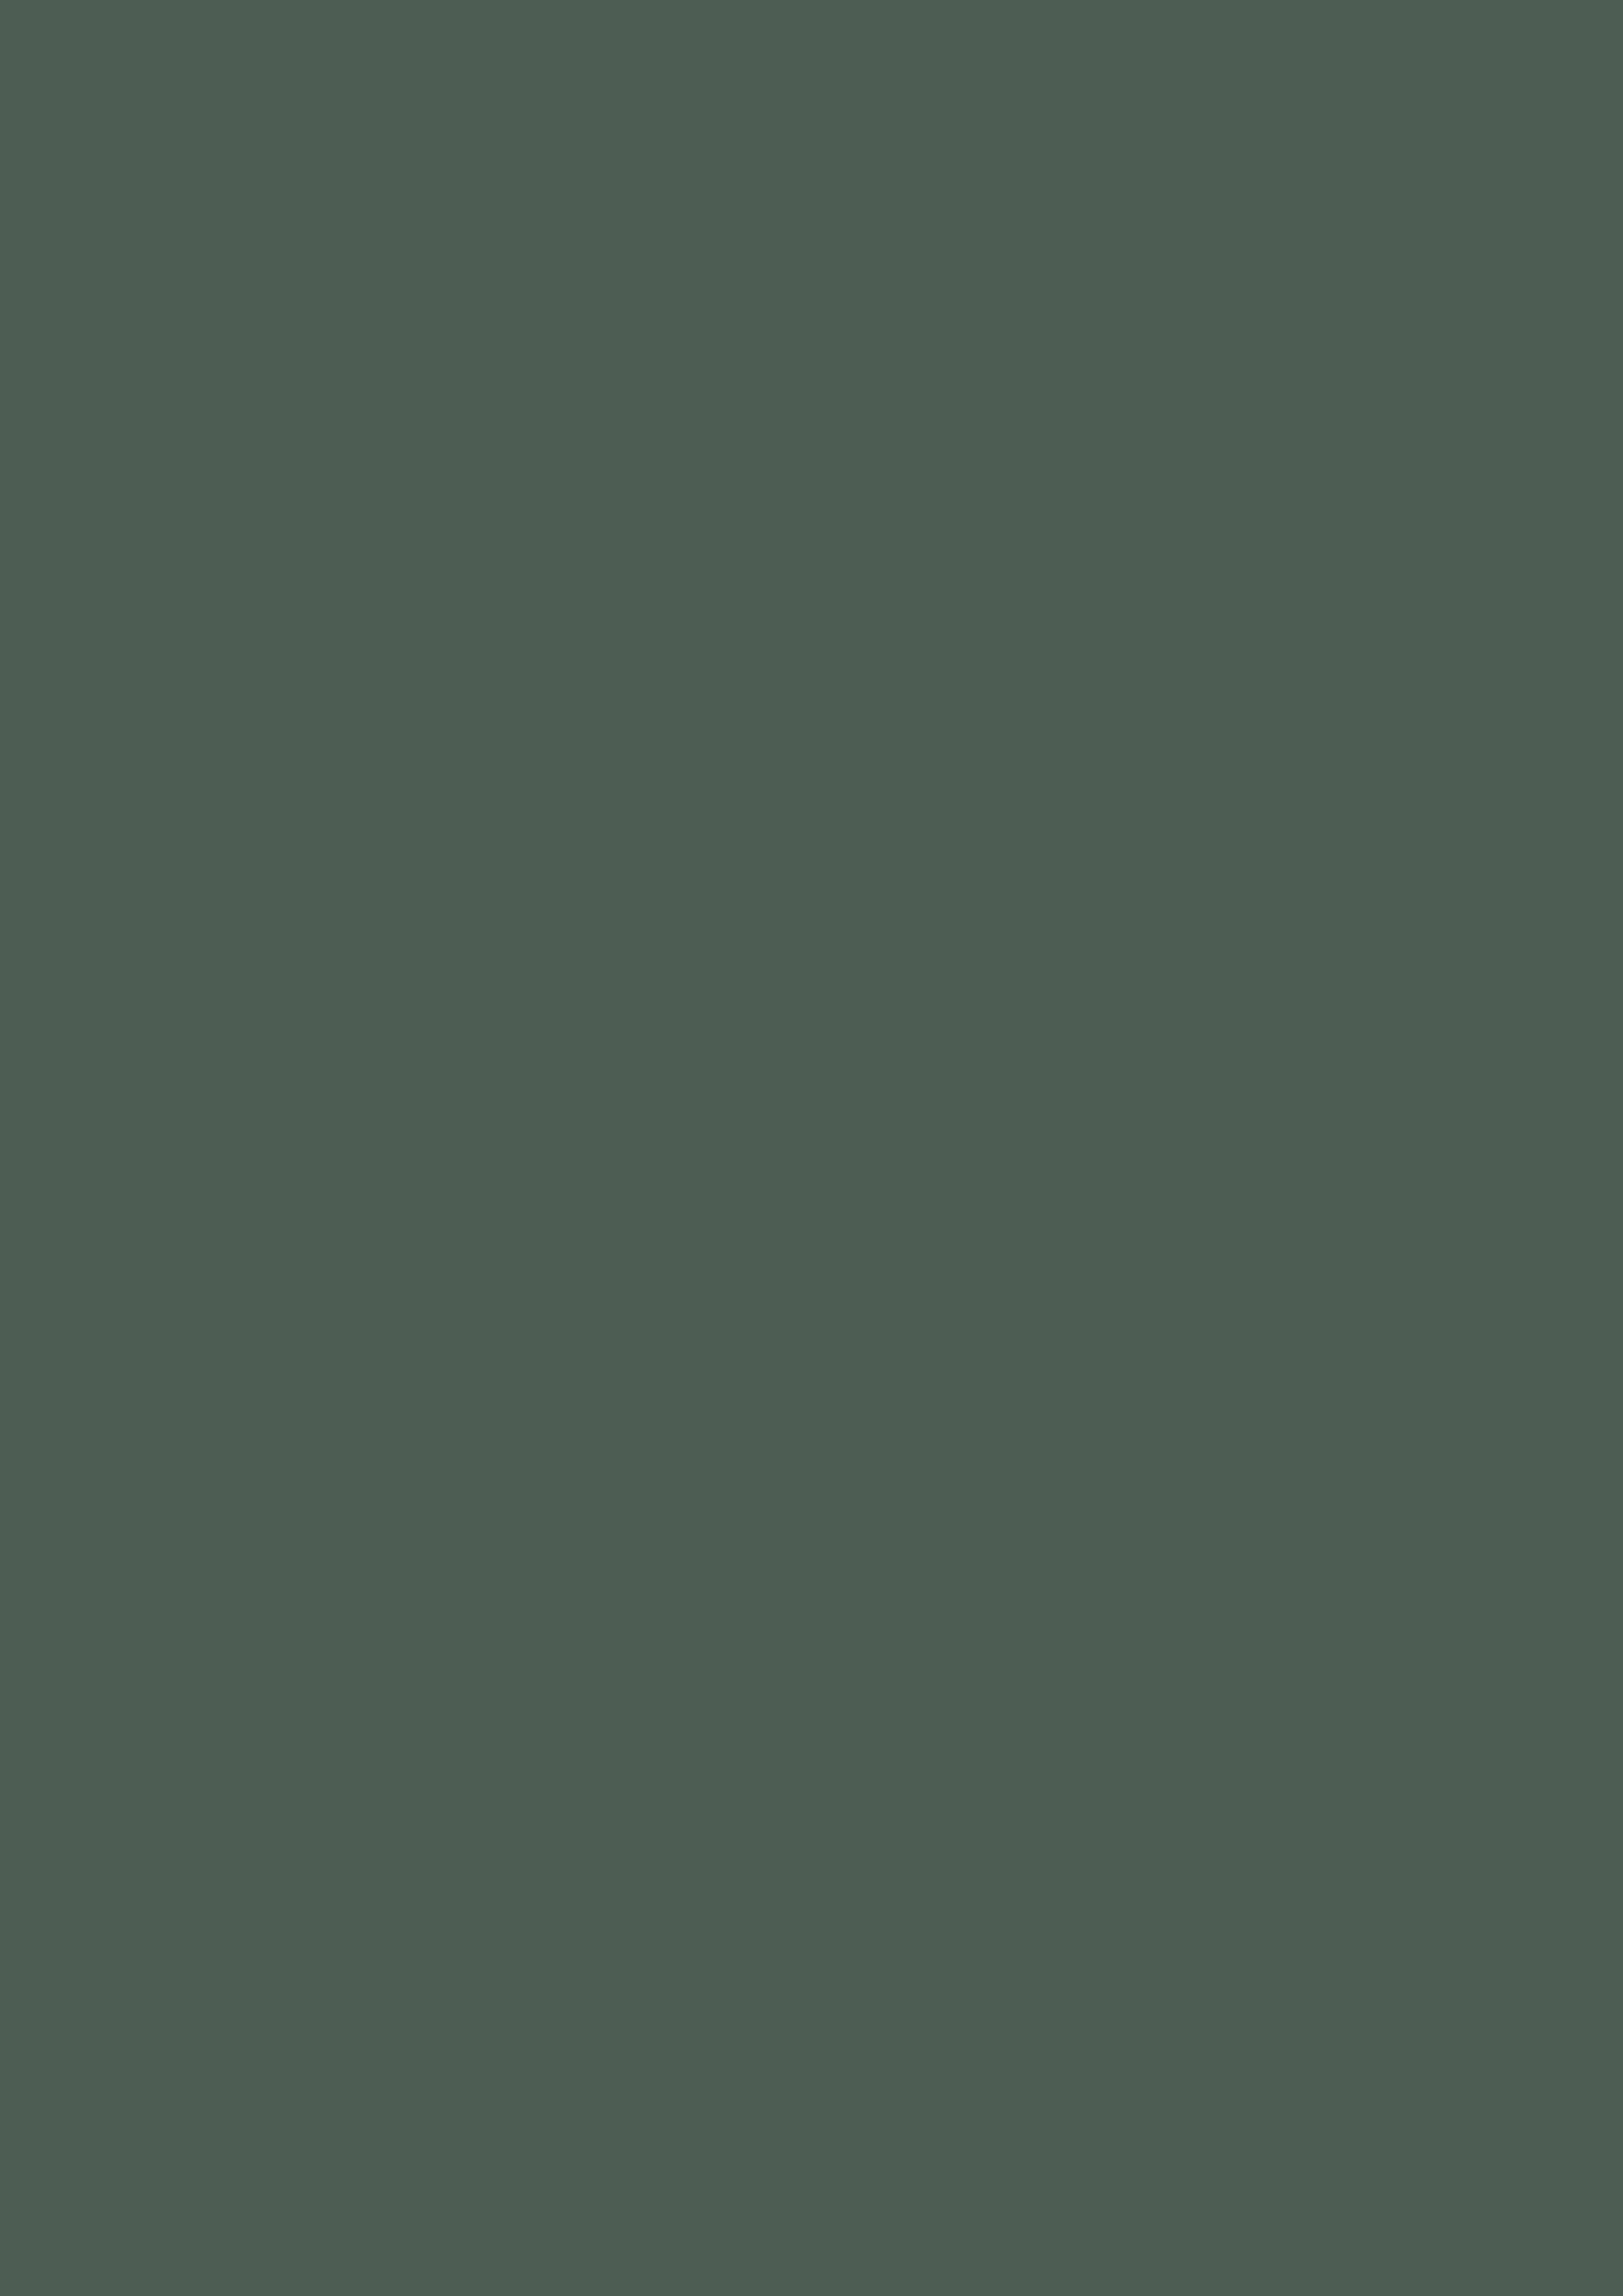 2480x3508 Feldgrau Solid Color Background